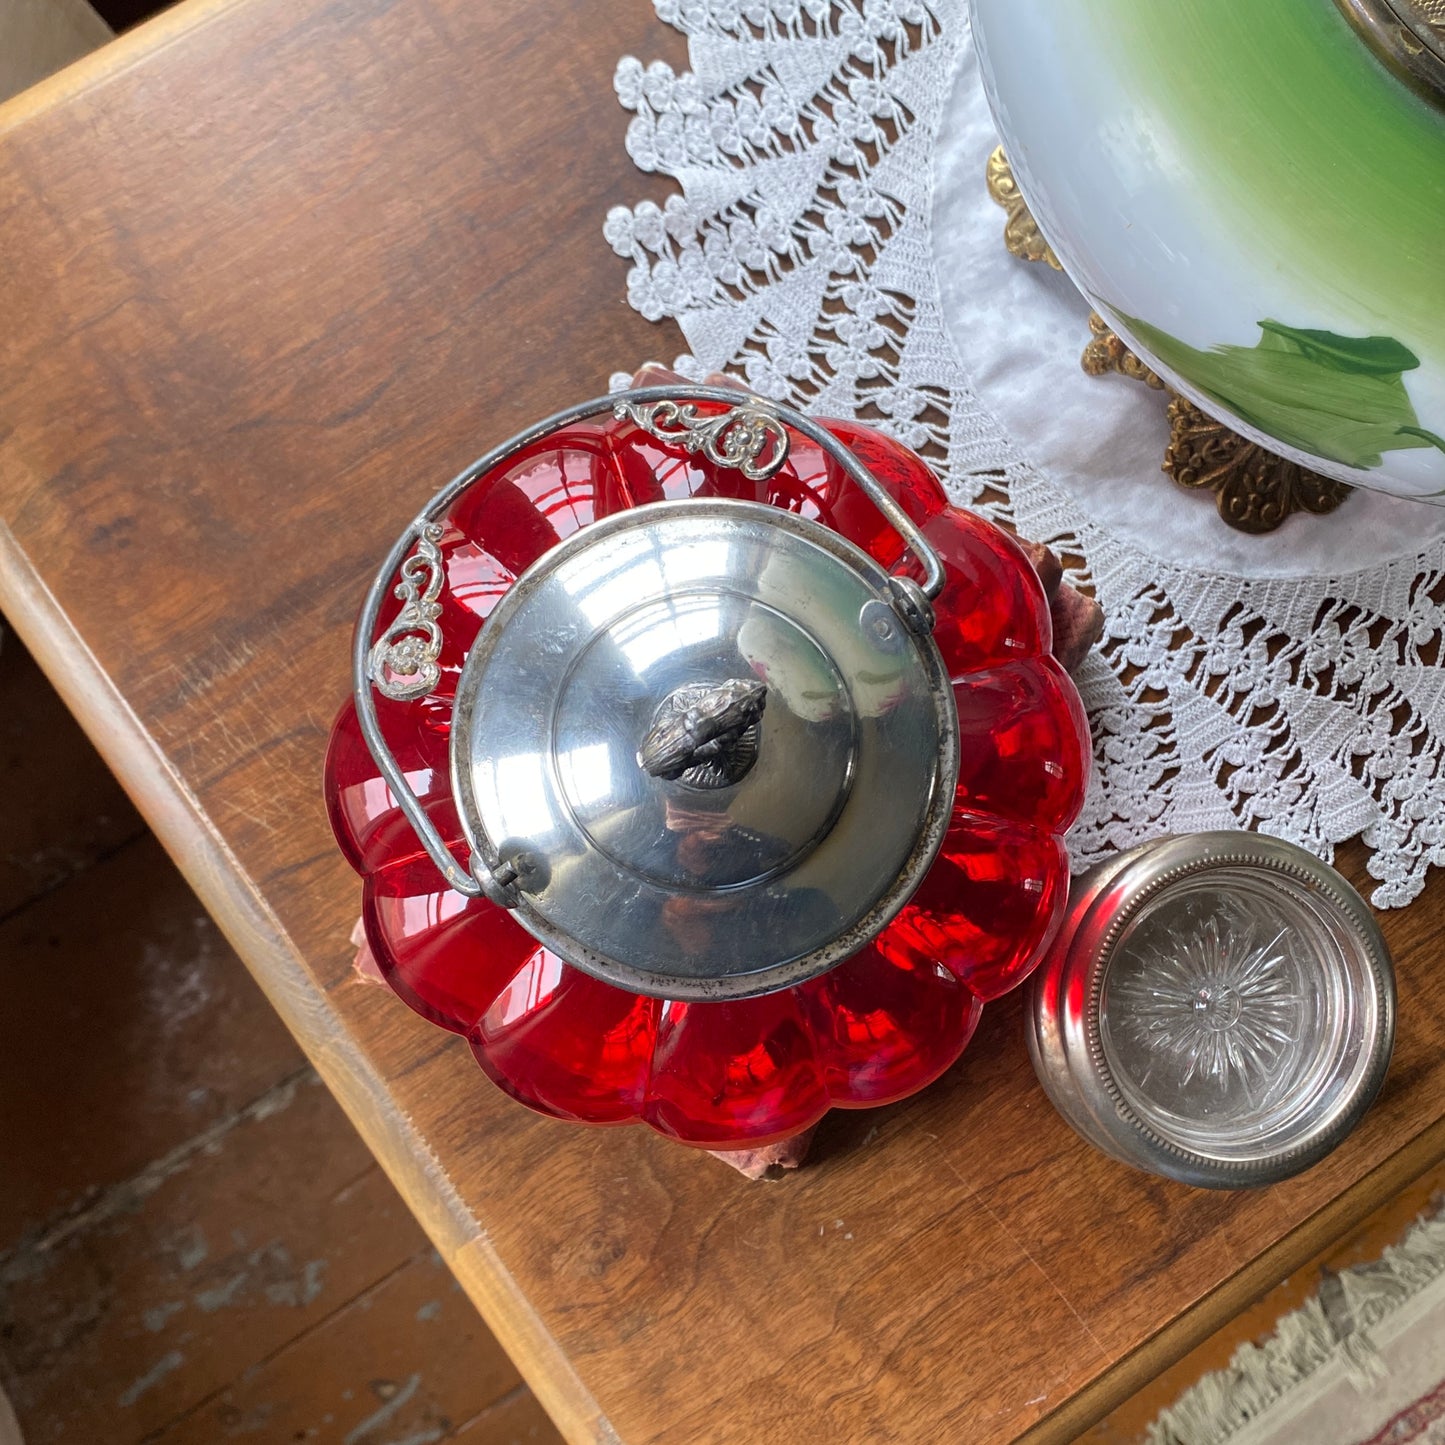 Victorian Ruby Glass Biscuit Jar